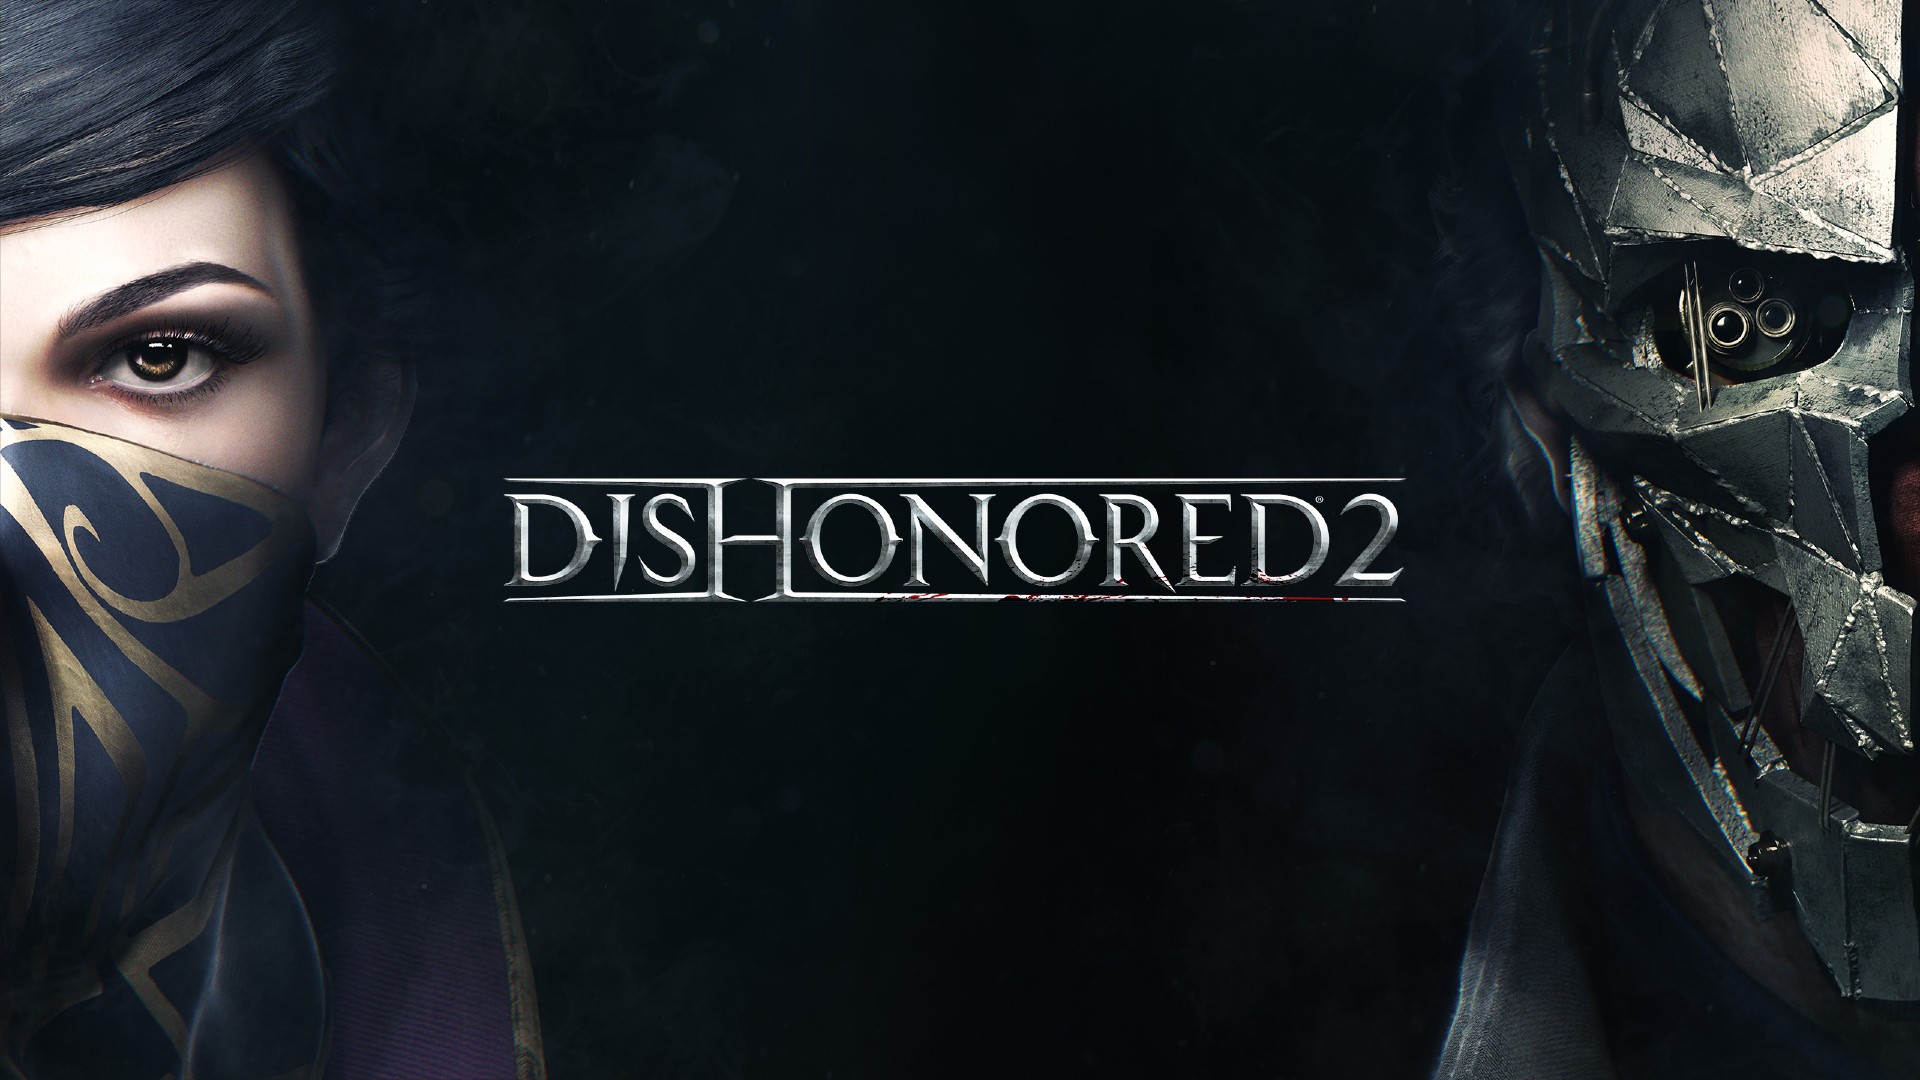 Análise - Dishonored 2 - MoshBit Gaming